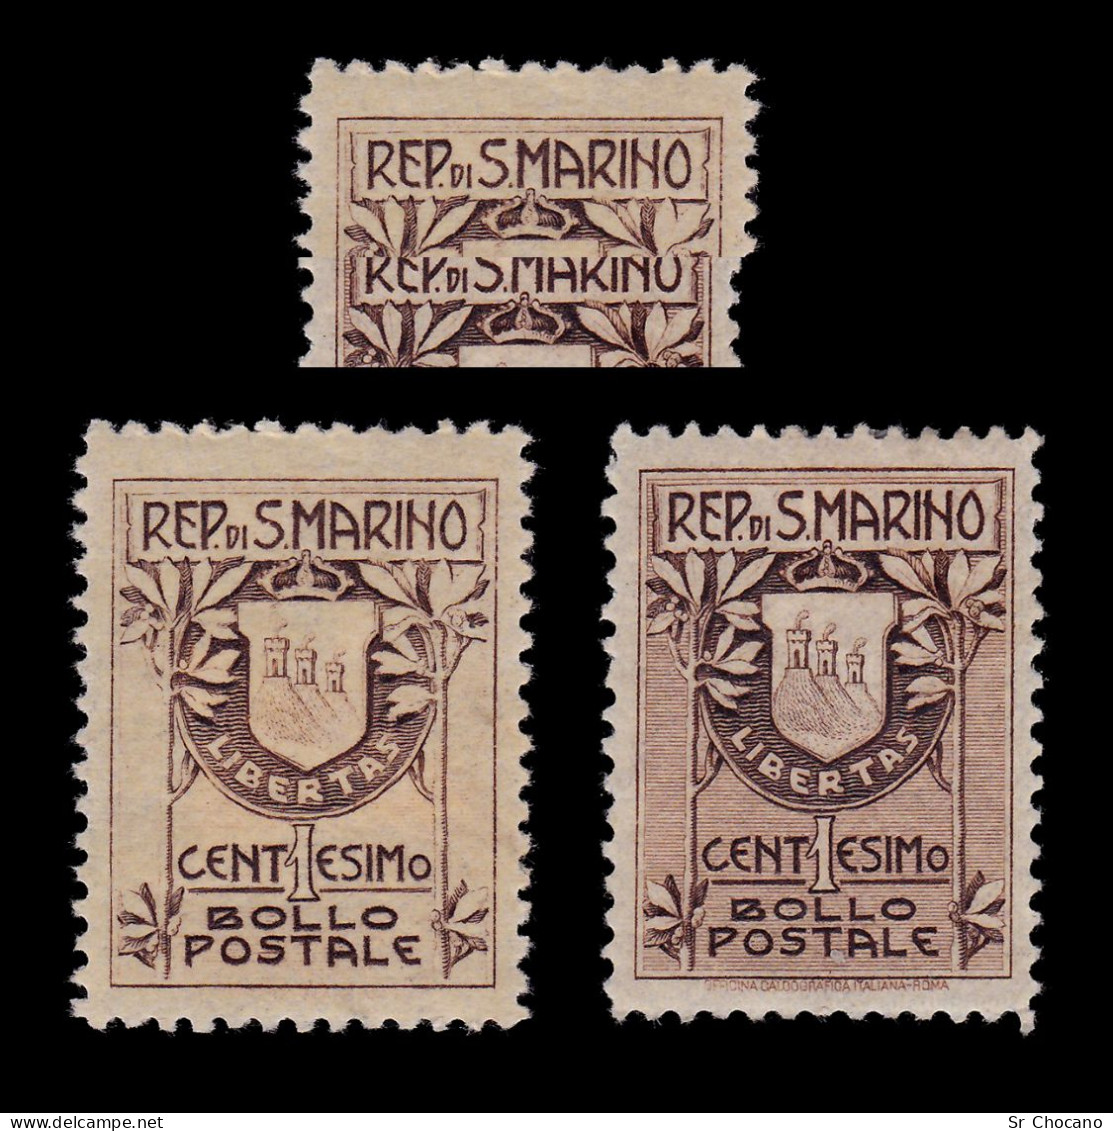 SAN MARINO.1905.1c Brown.Type 1(18 1/2 Mm)- Type 2 (19 Mm).Scott 78-78a.MH. - Unused Stamps